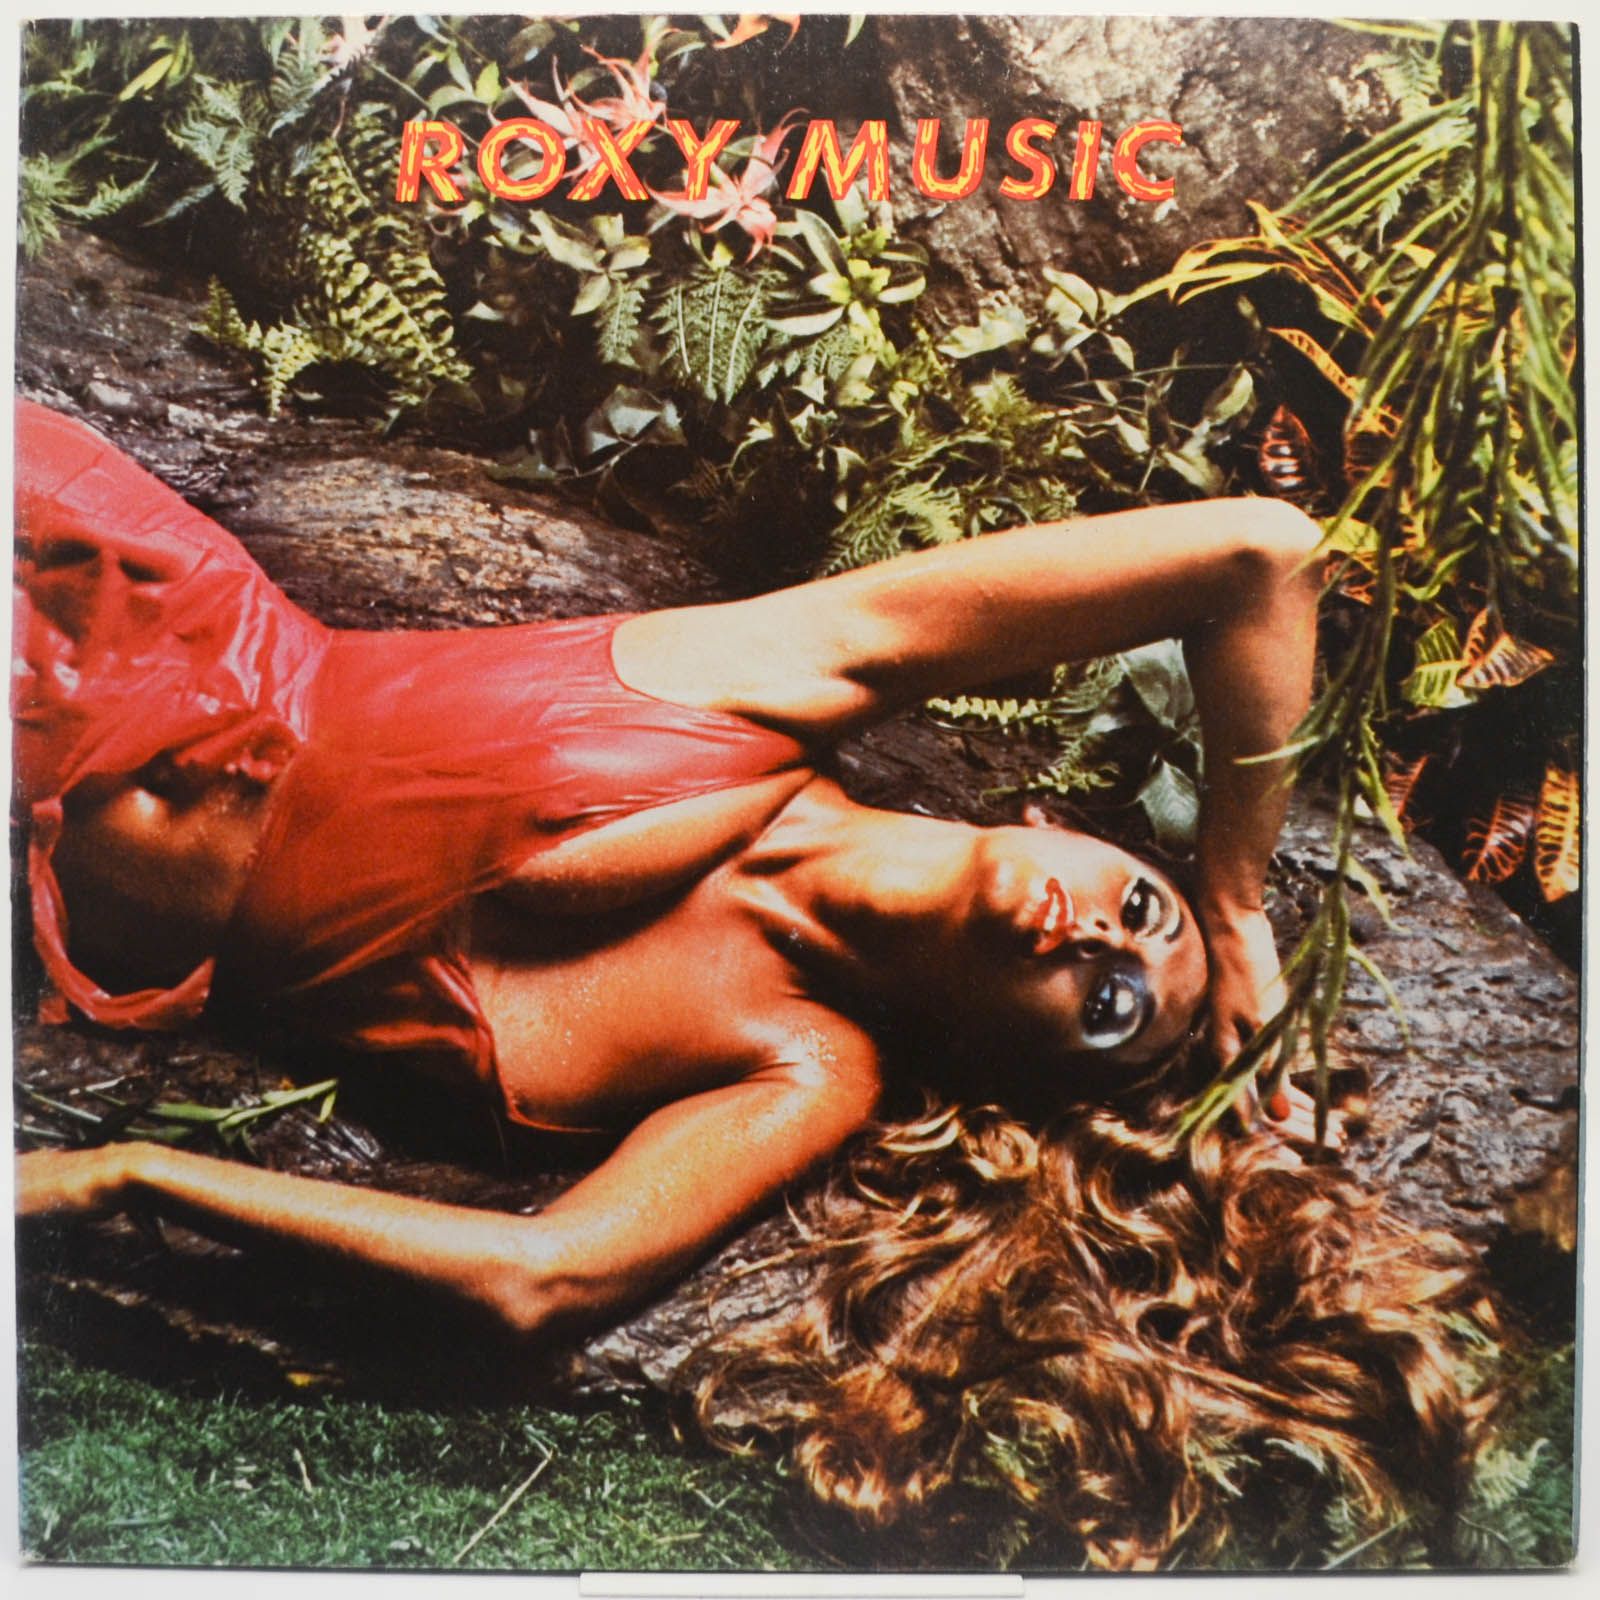 Roxy Music — Stranded, 1973